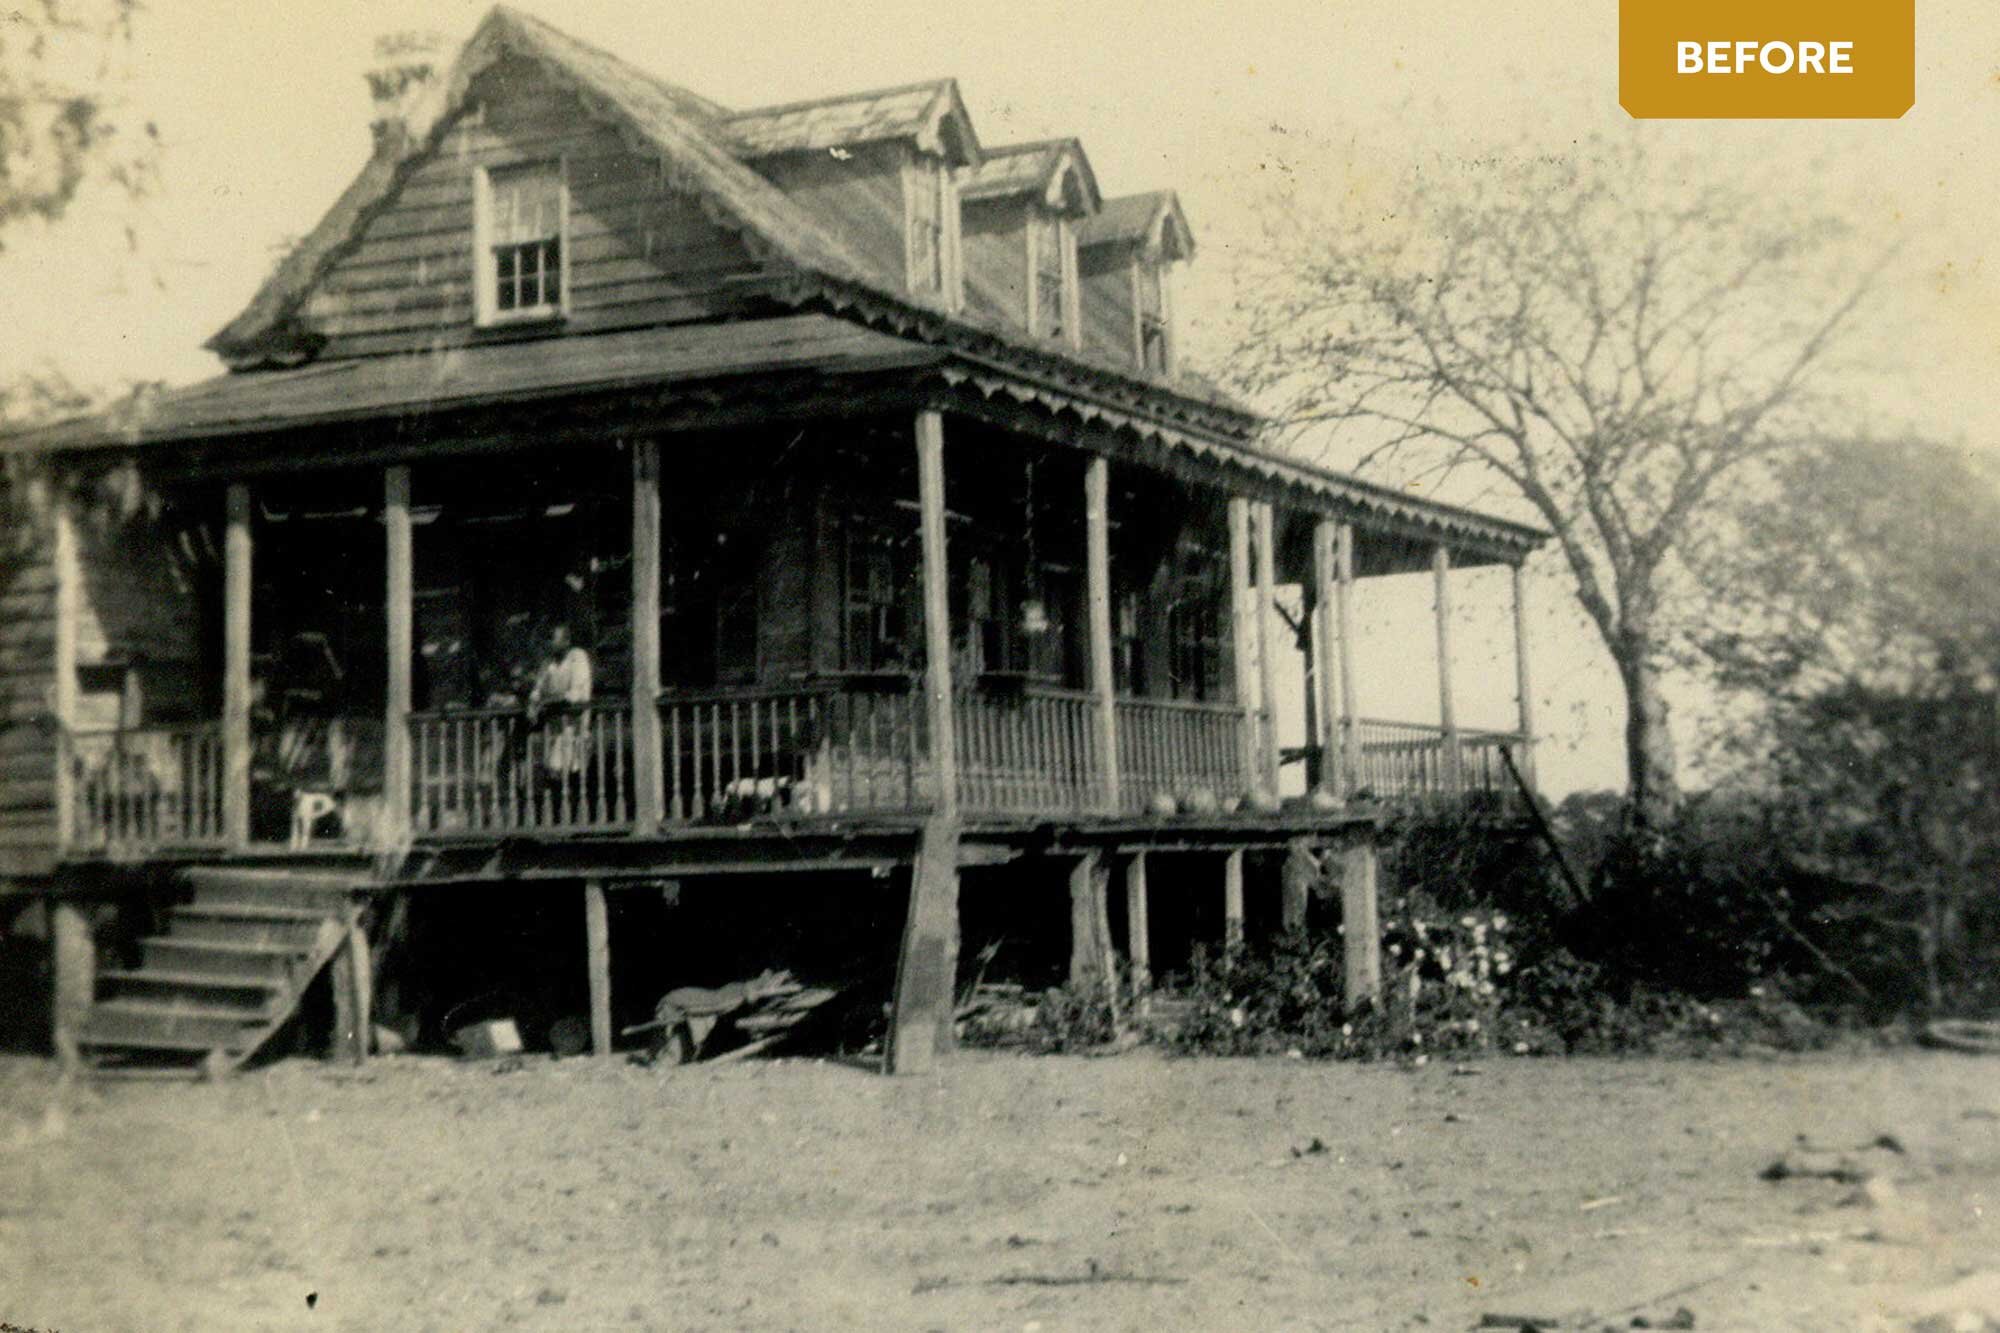 hutchinson-house-before-image.jpg